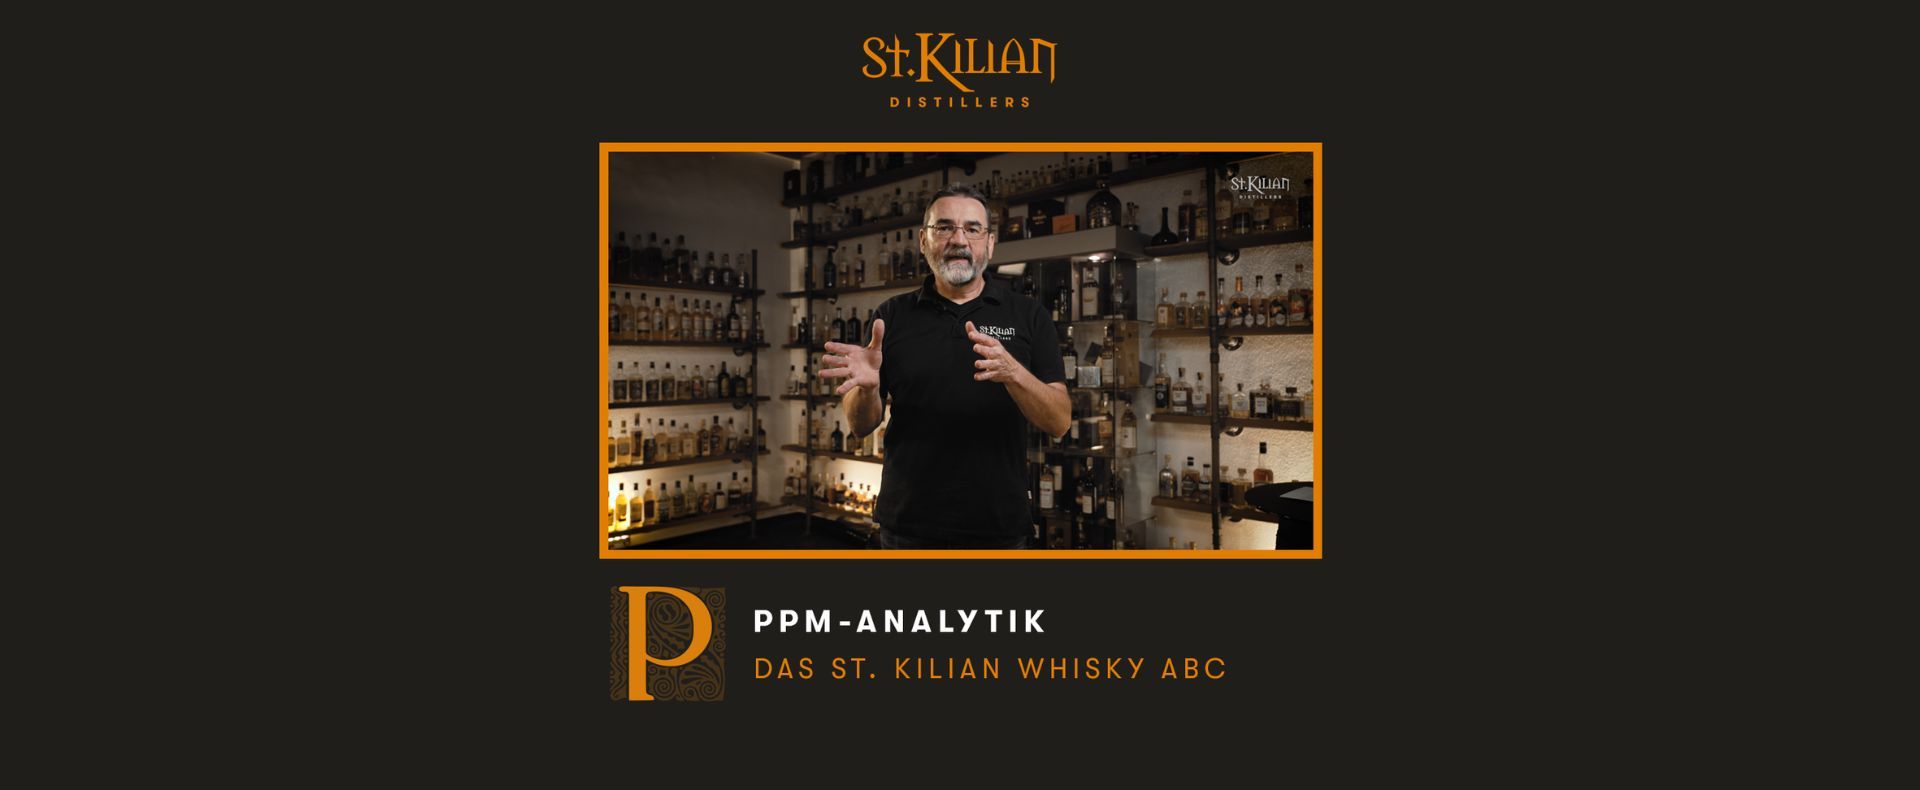 Whisky ABC - P wie PPM-Analytik